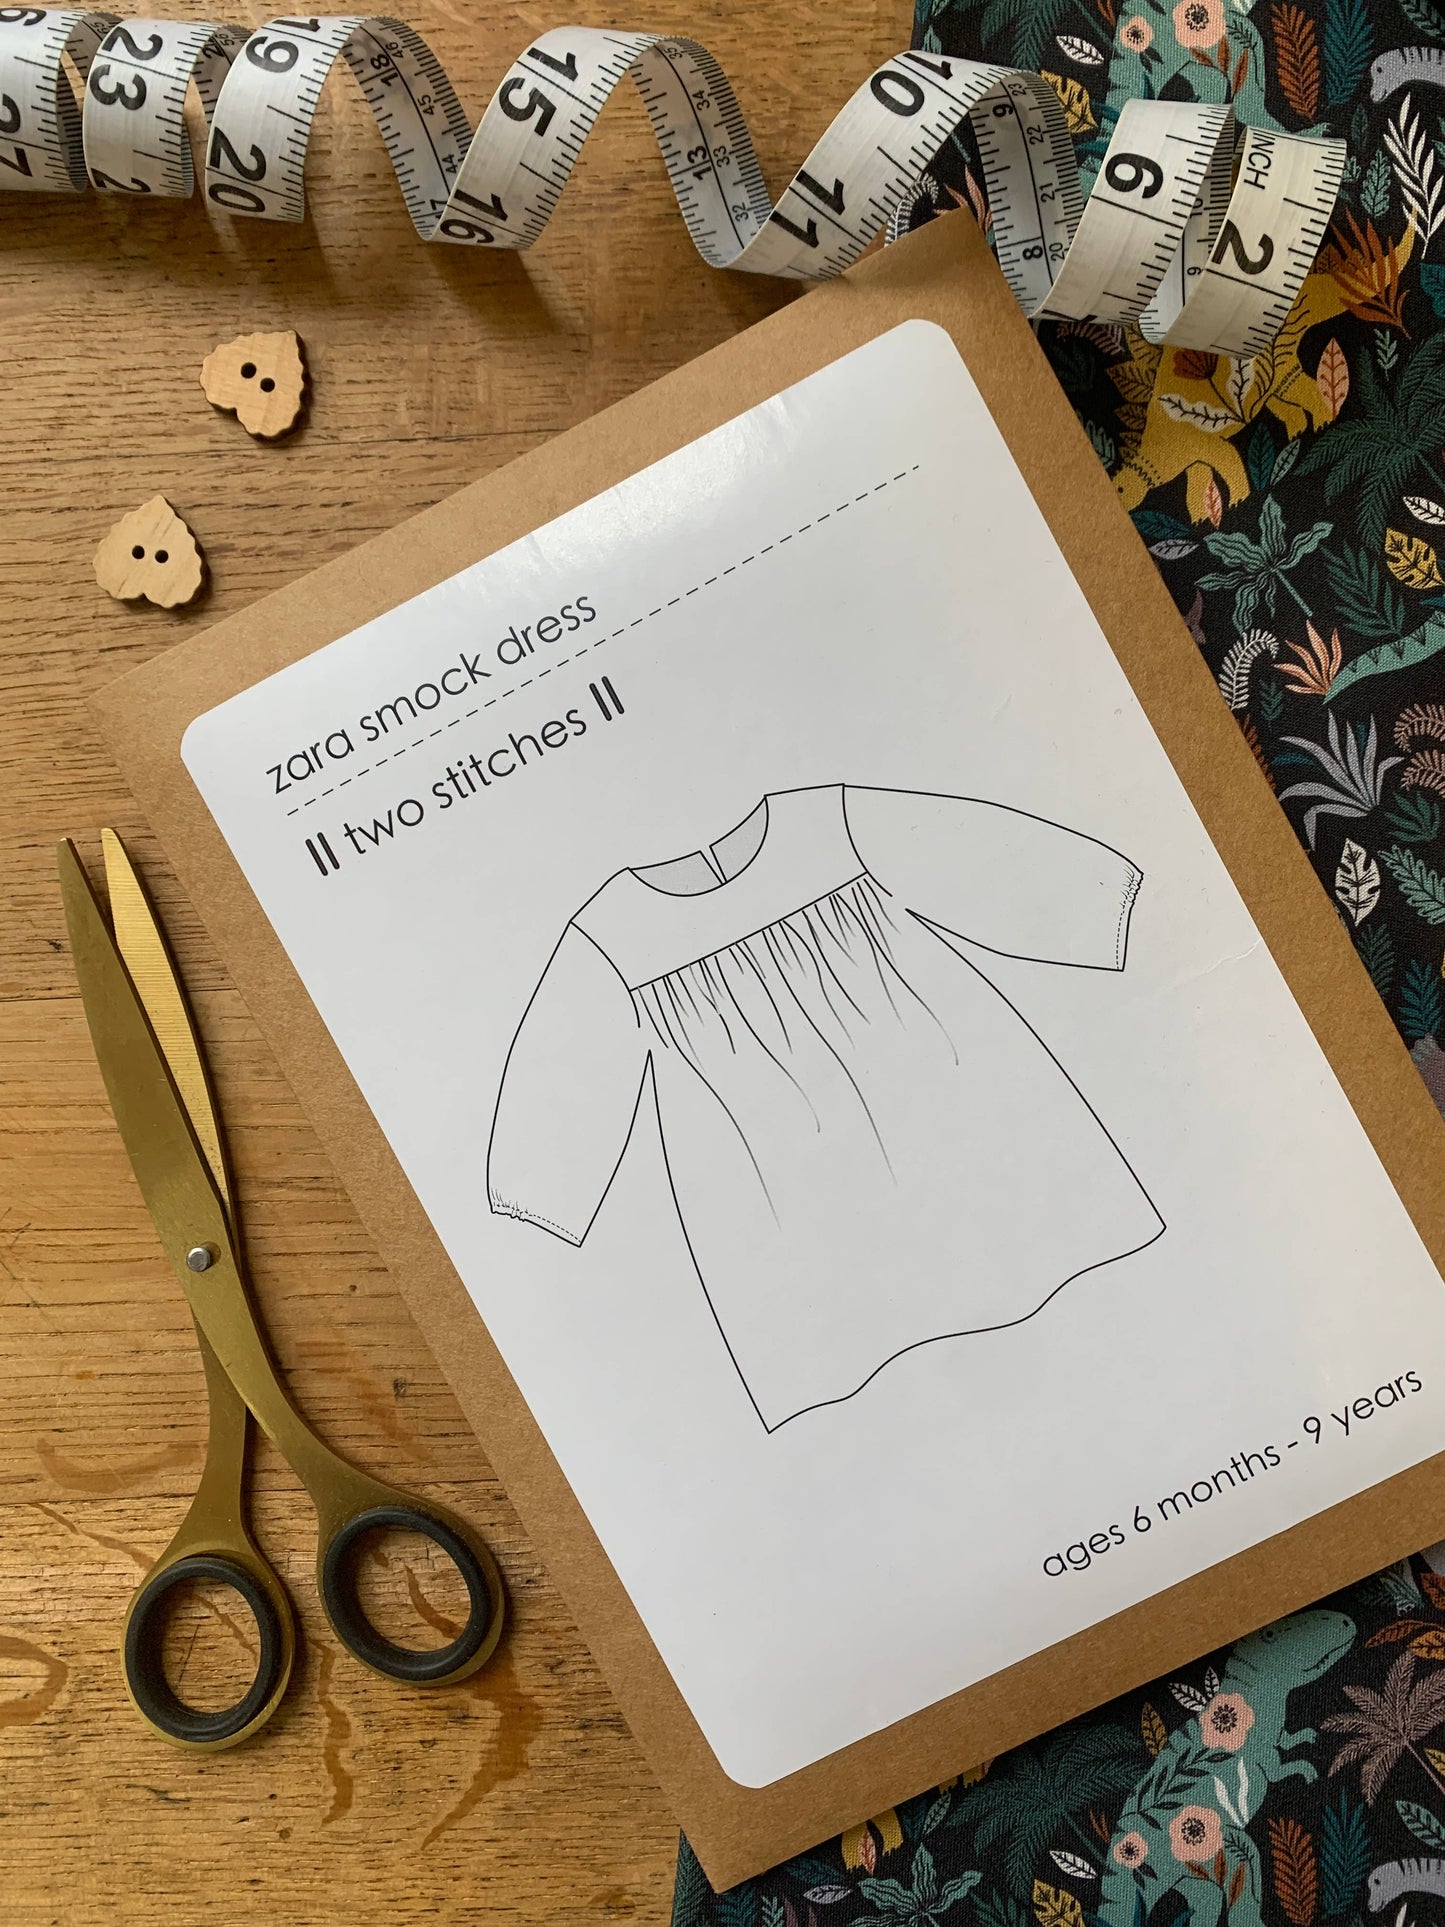 Zara Smock Dress Sewing Pattern for Childrenswear